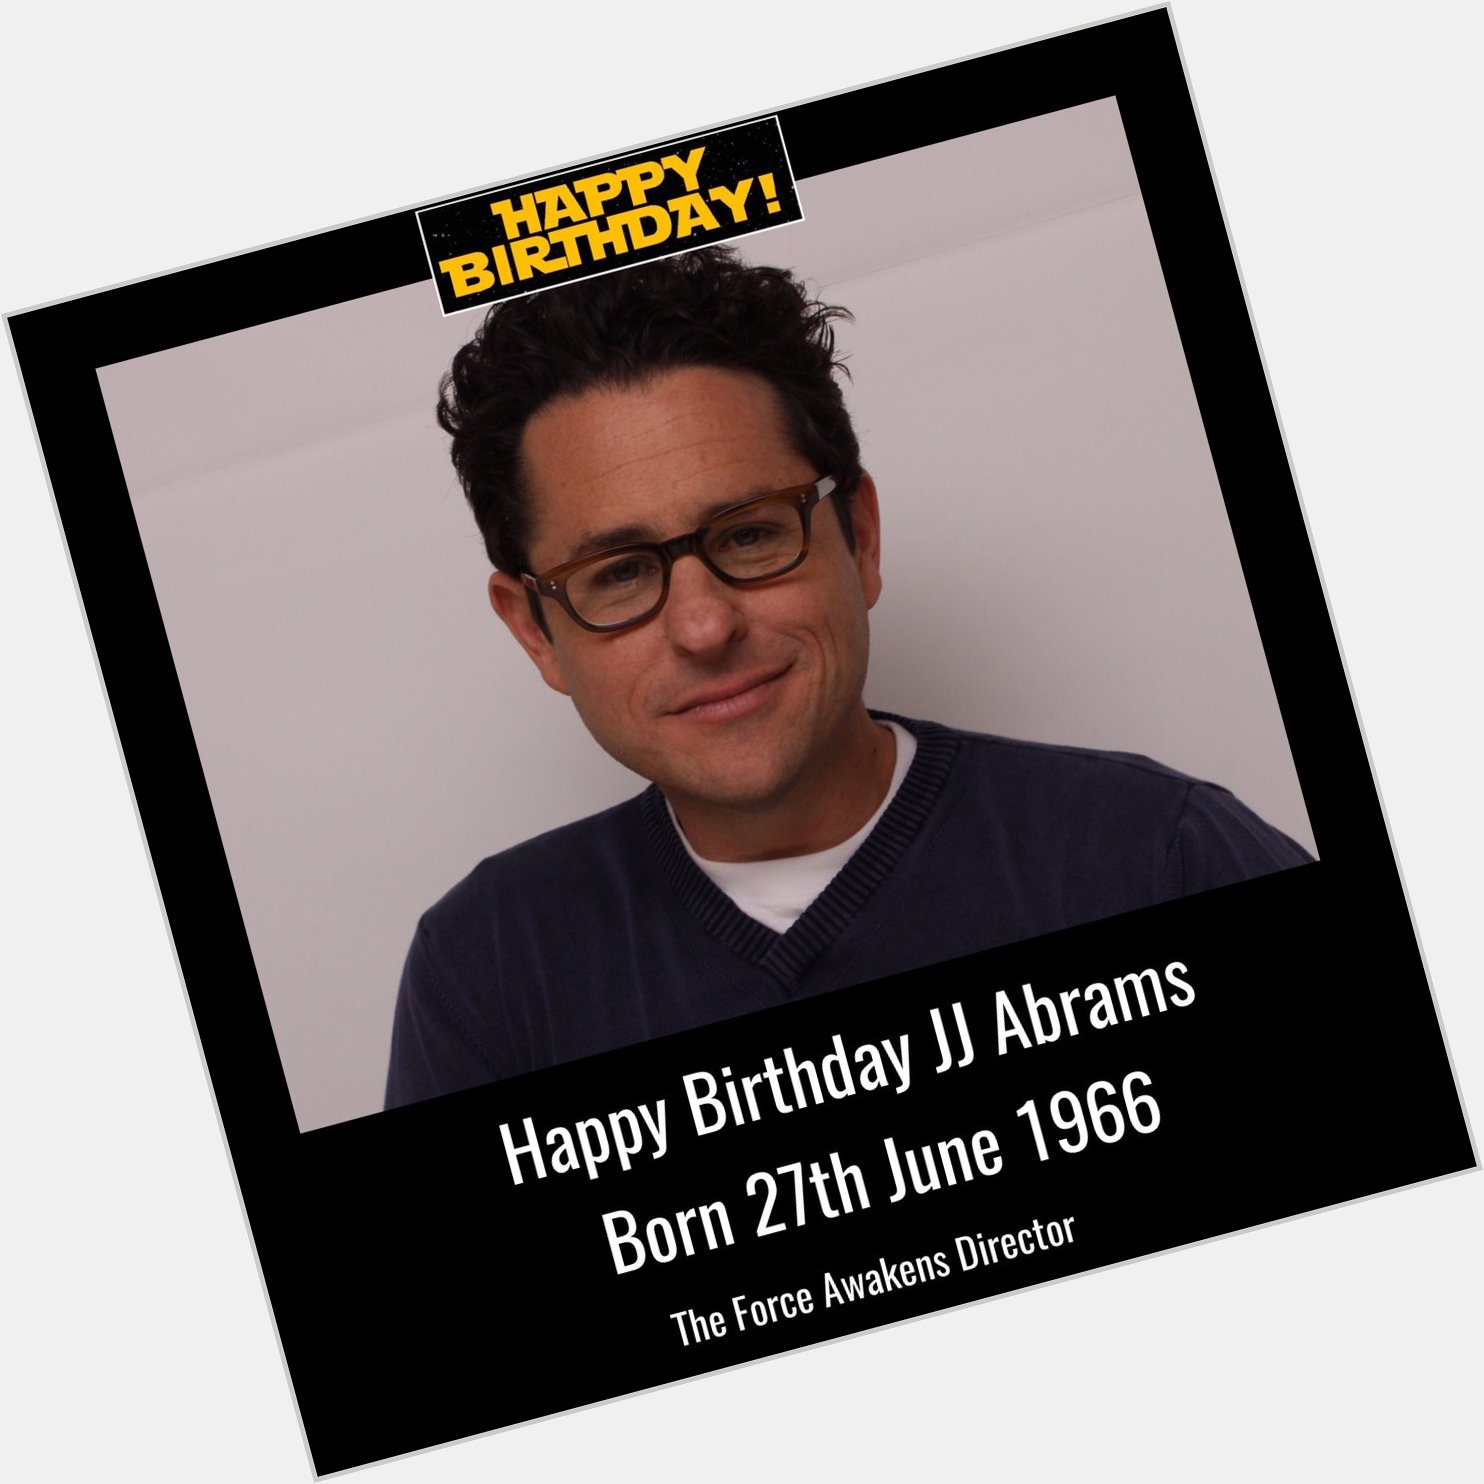 Happy Birthday JJ Abrams, born 27th June 1966.  